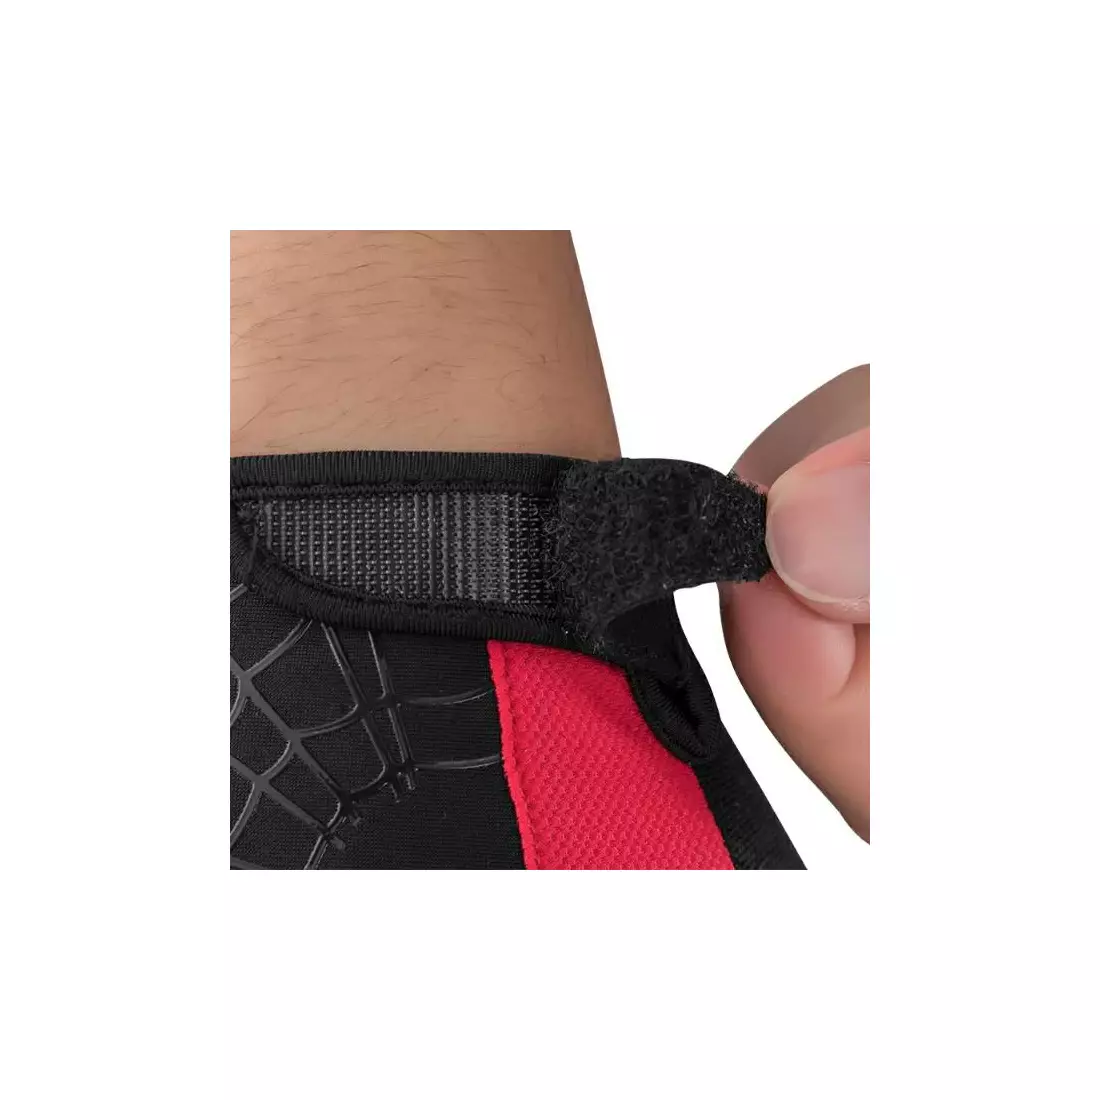 Rockbros mănuși de ciclism, negru-roșu S109-1BR